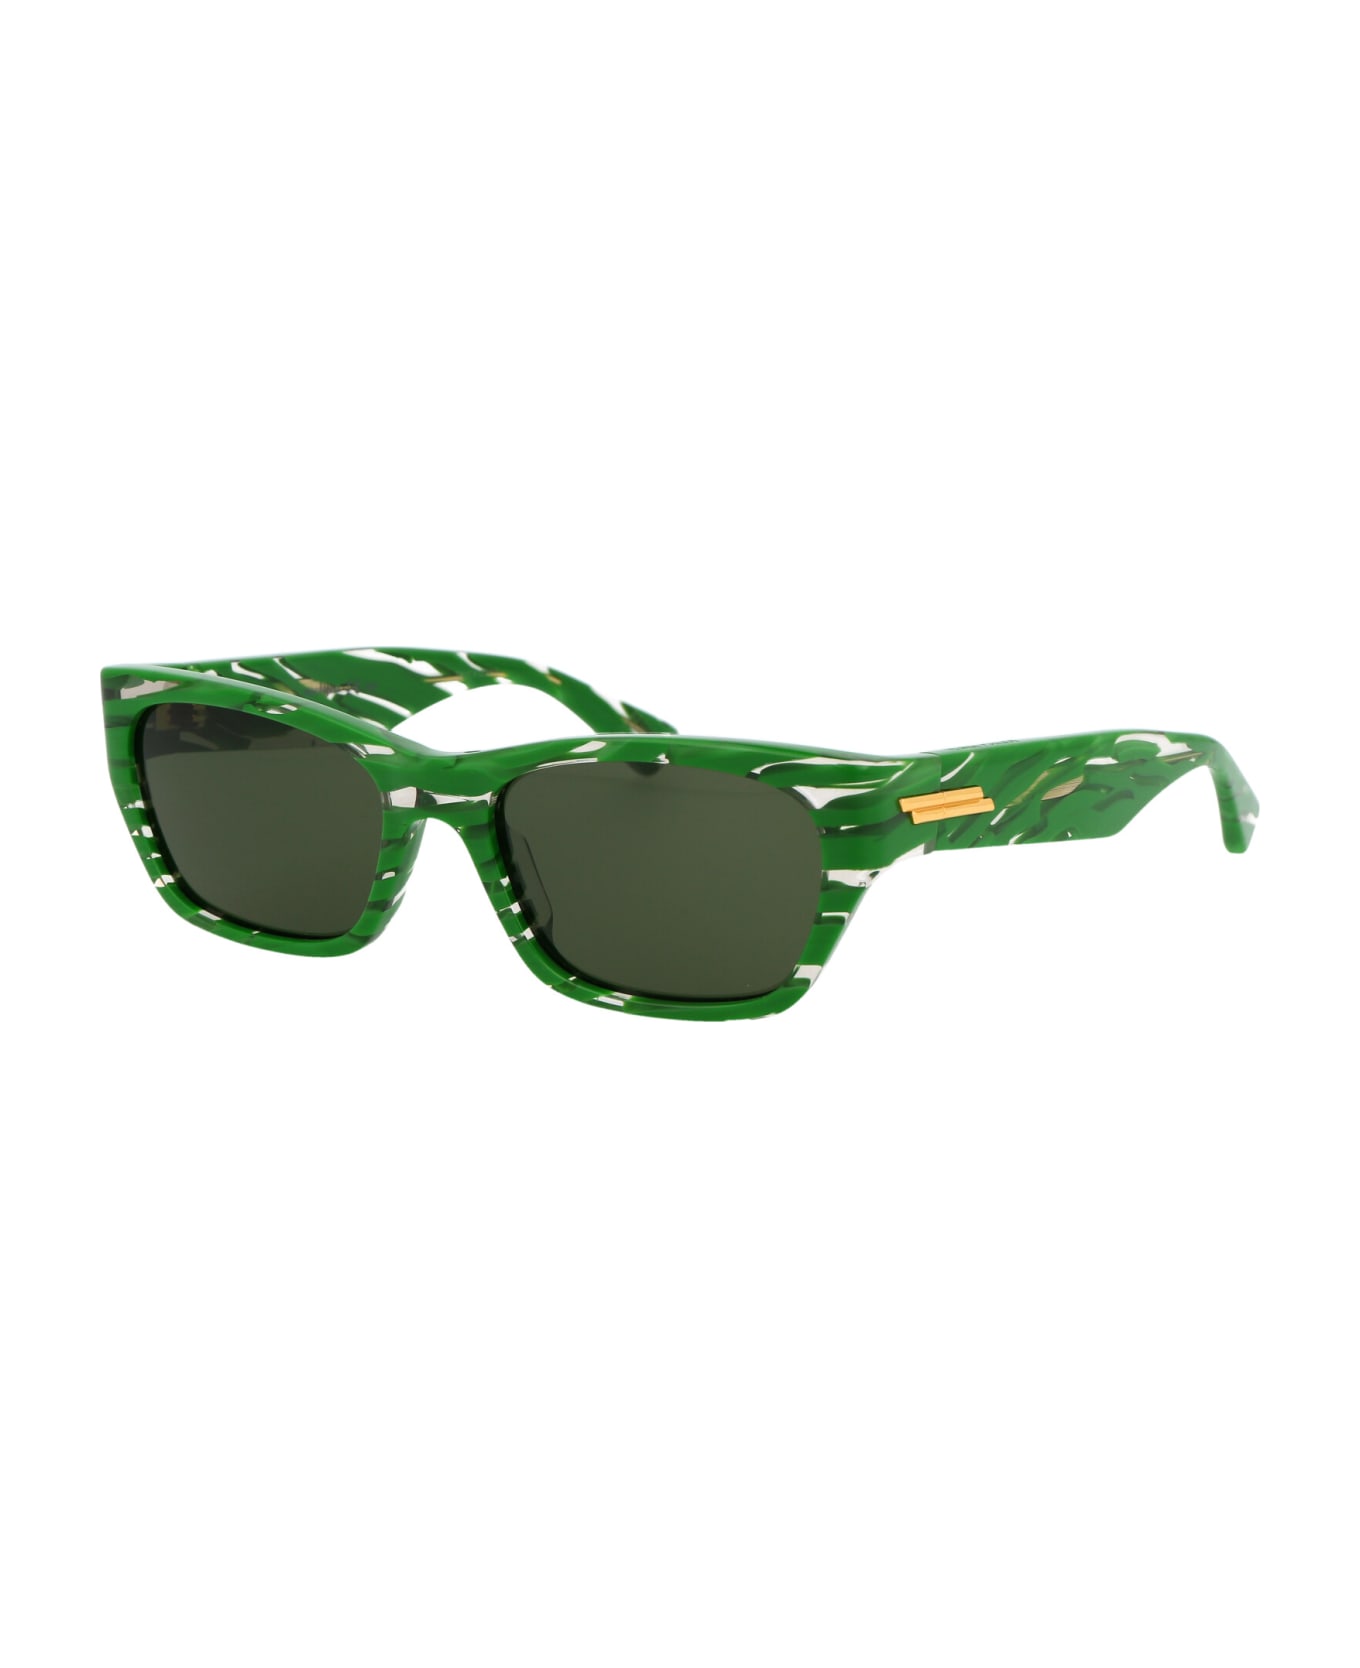 Bottega Veneta Eyewear Bv1143s Sunglasses - 004 GREEN GREEN GREEN